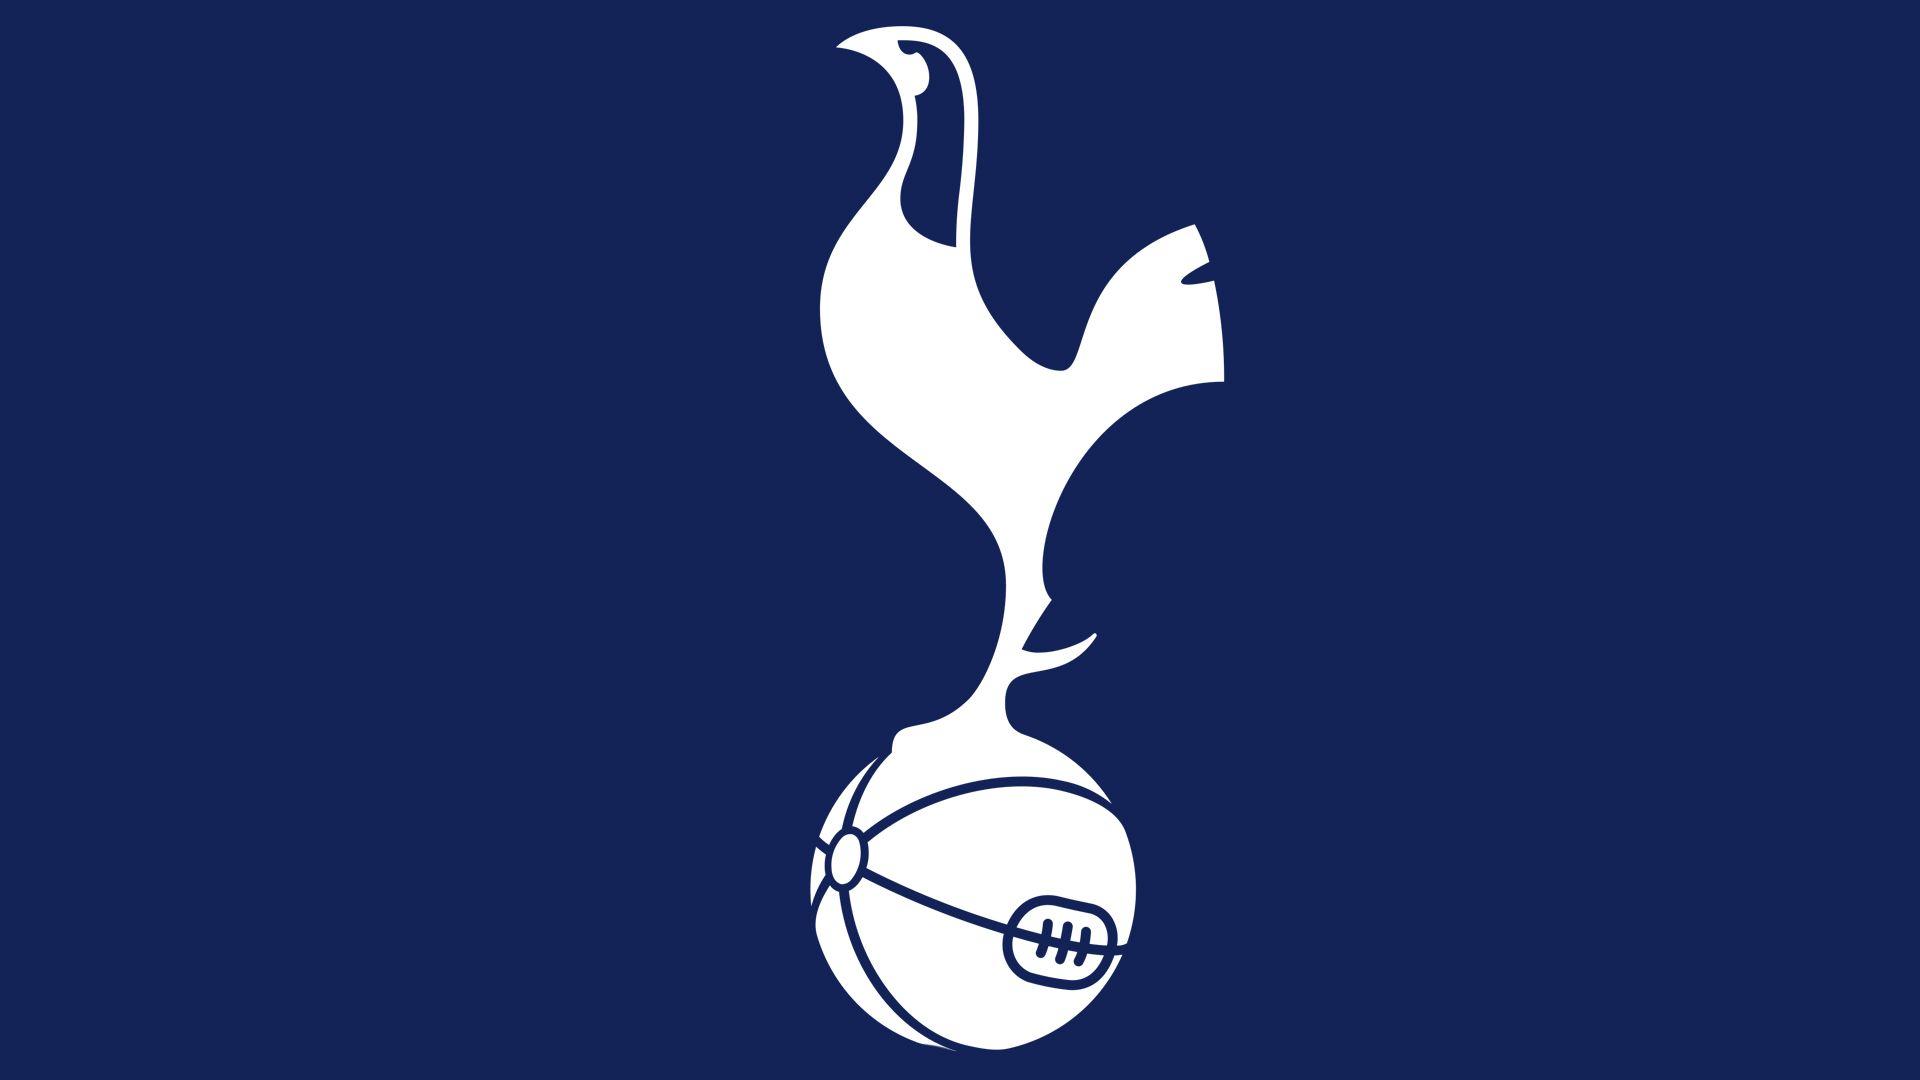 Tottenhsm Logo - Meaning Tottenham Hotspur logo and symbol | history and evolution